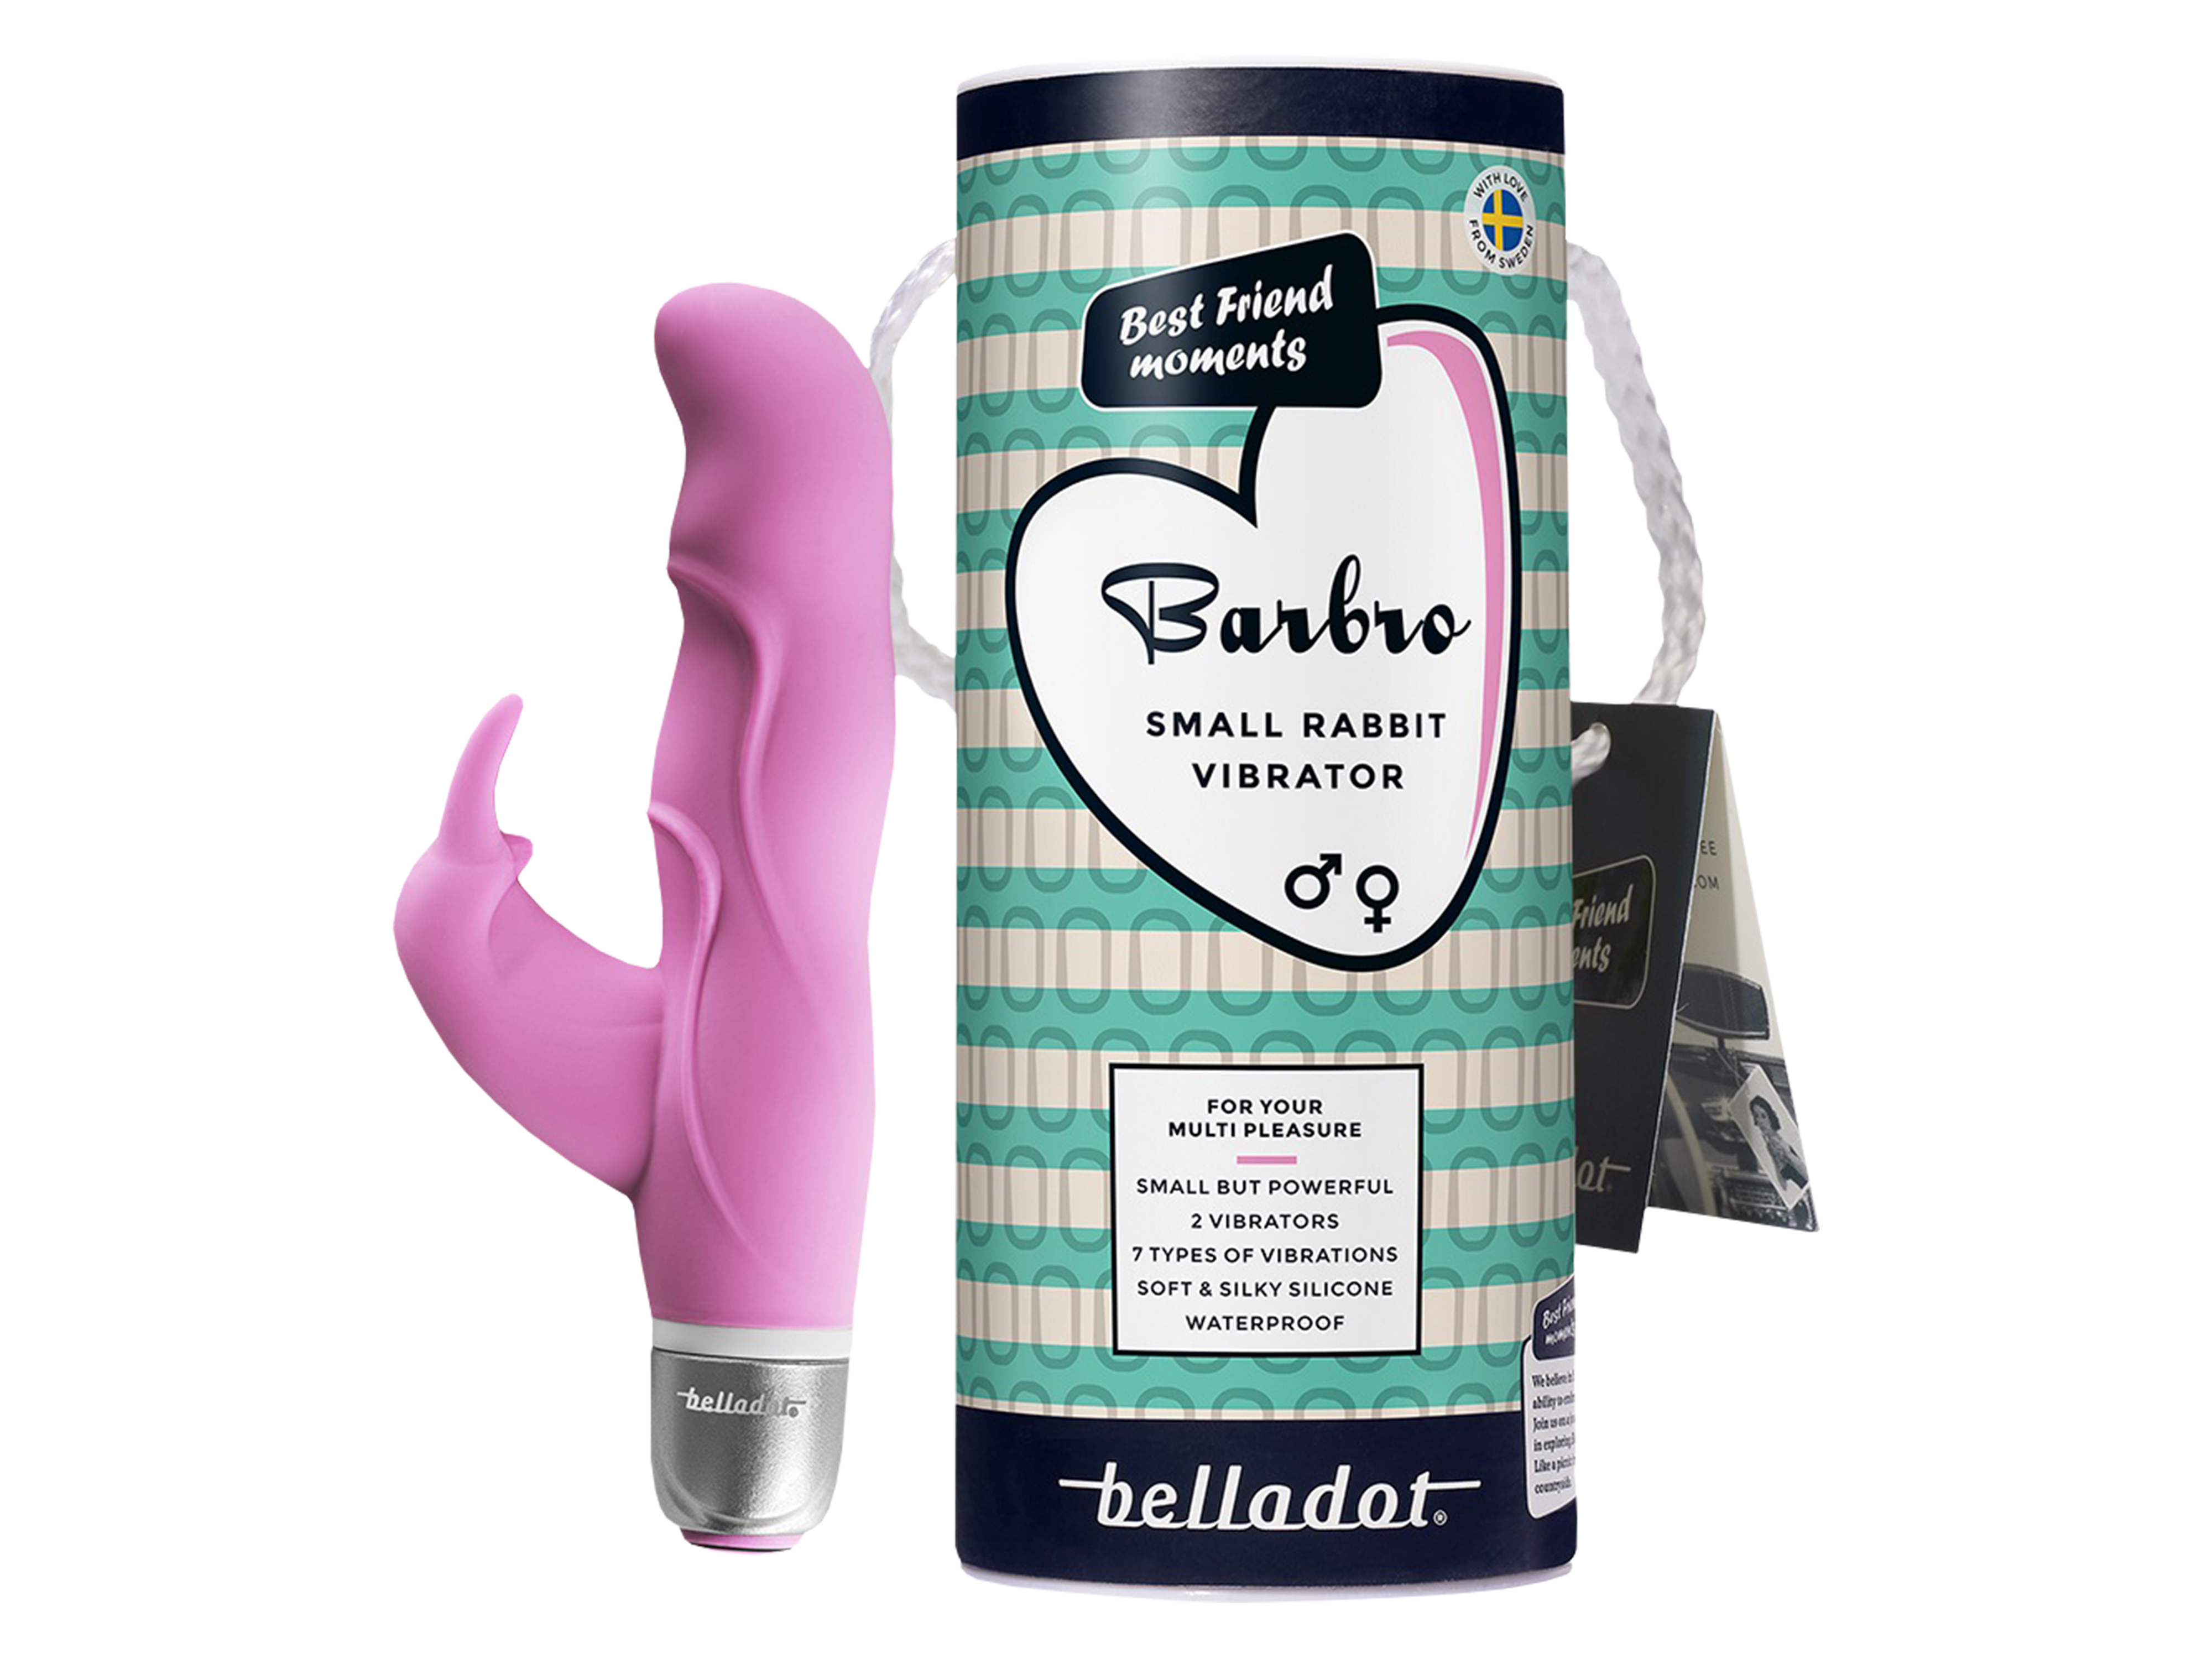 Belladot Barbro Small Rabbit Vibrator, Rosa, 1 stk.